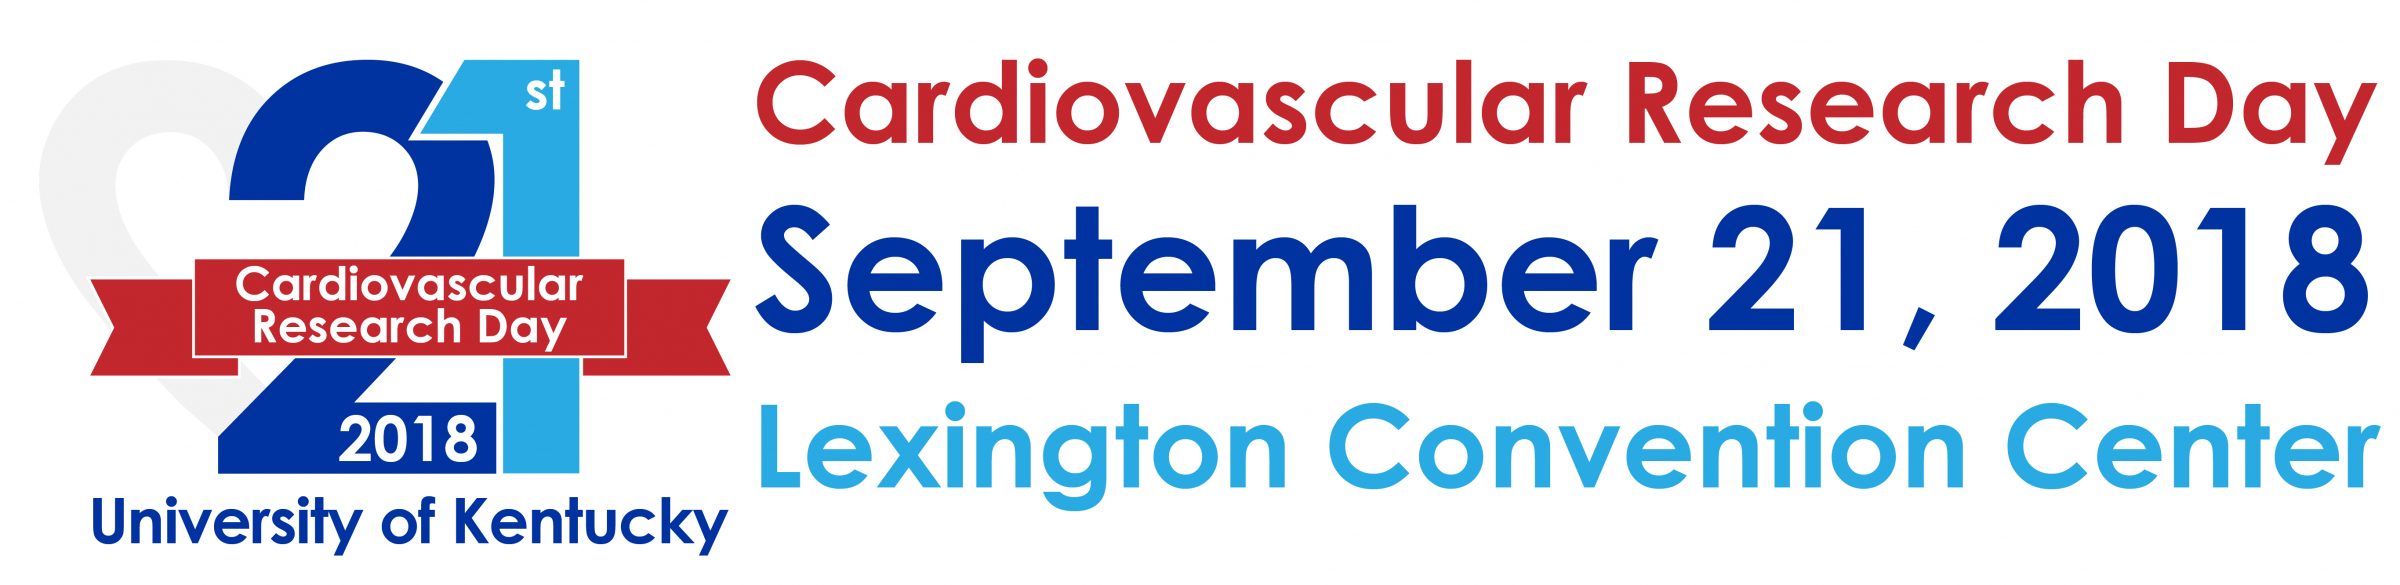 21st Cardiovascular Research Day. September 21, 2018. Lexington Convention Center